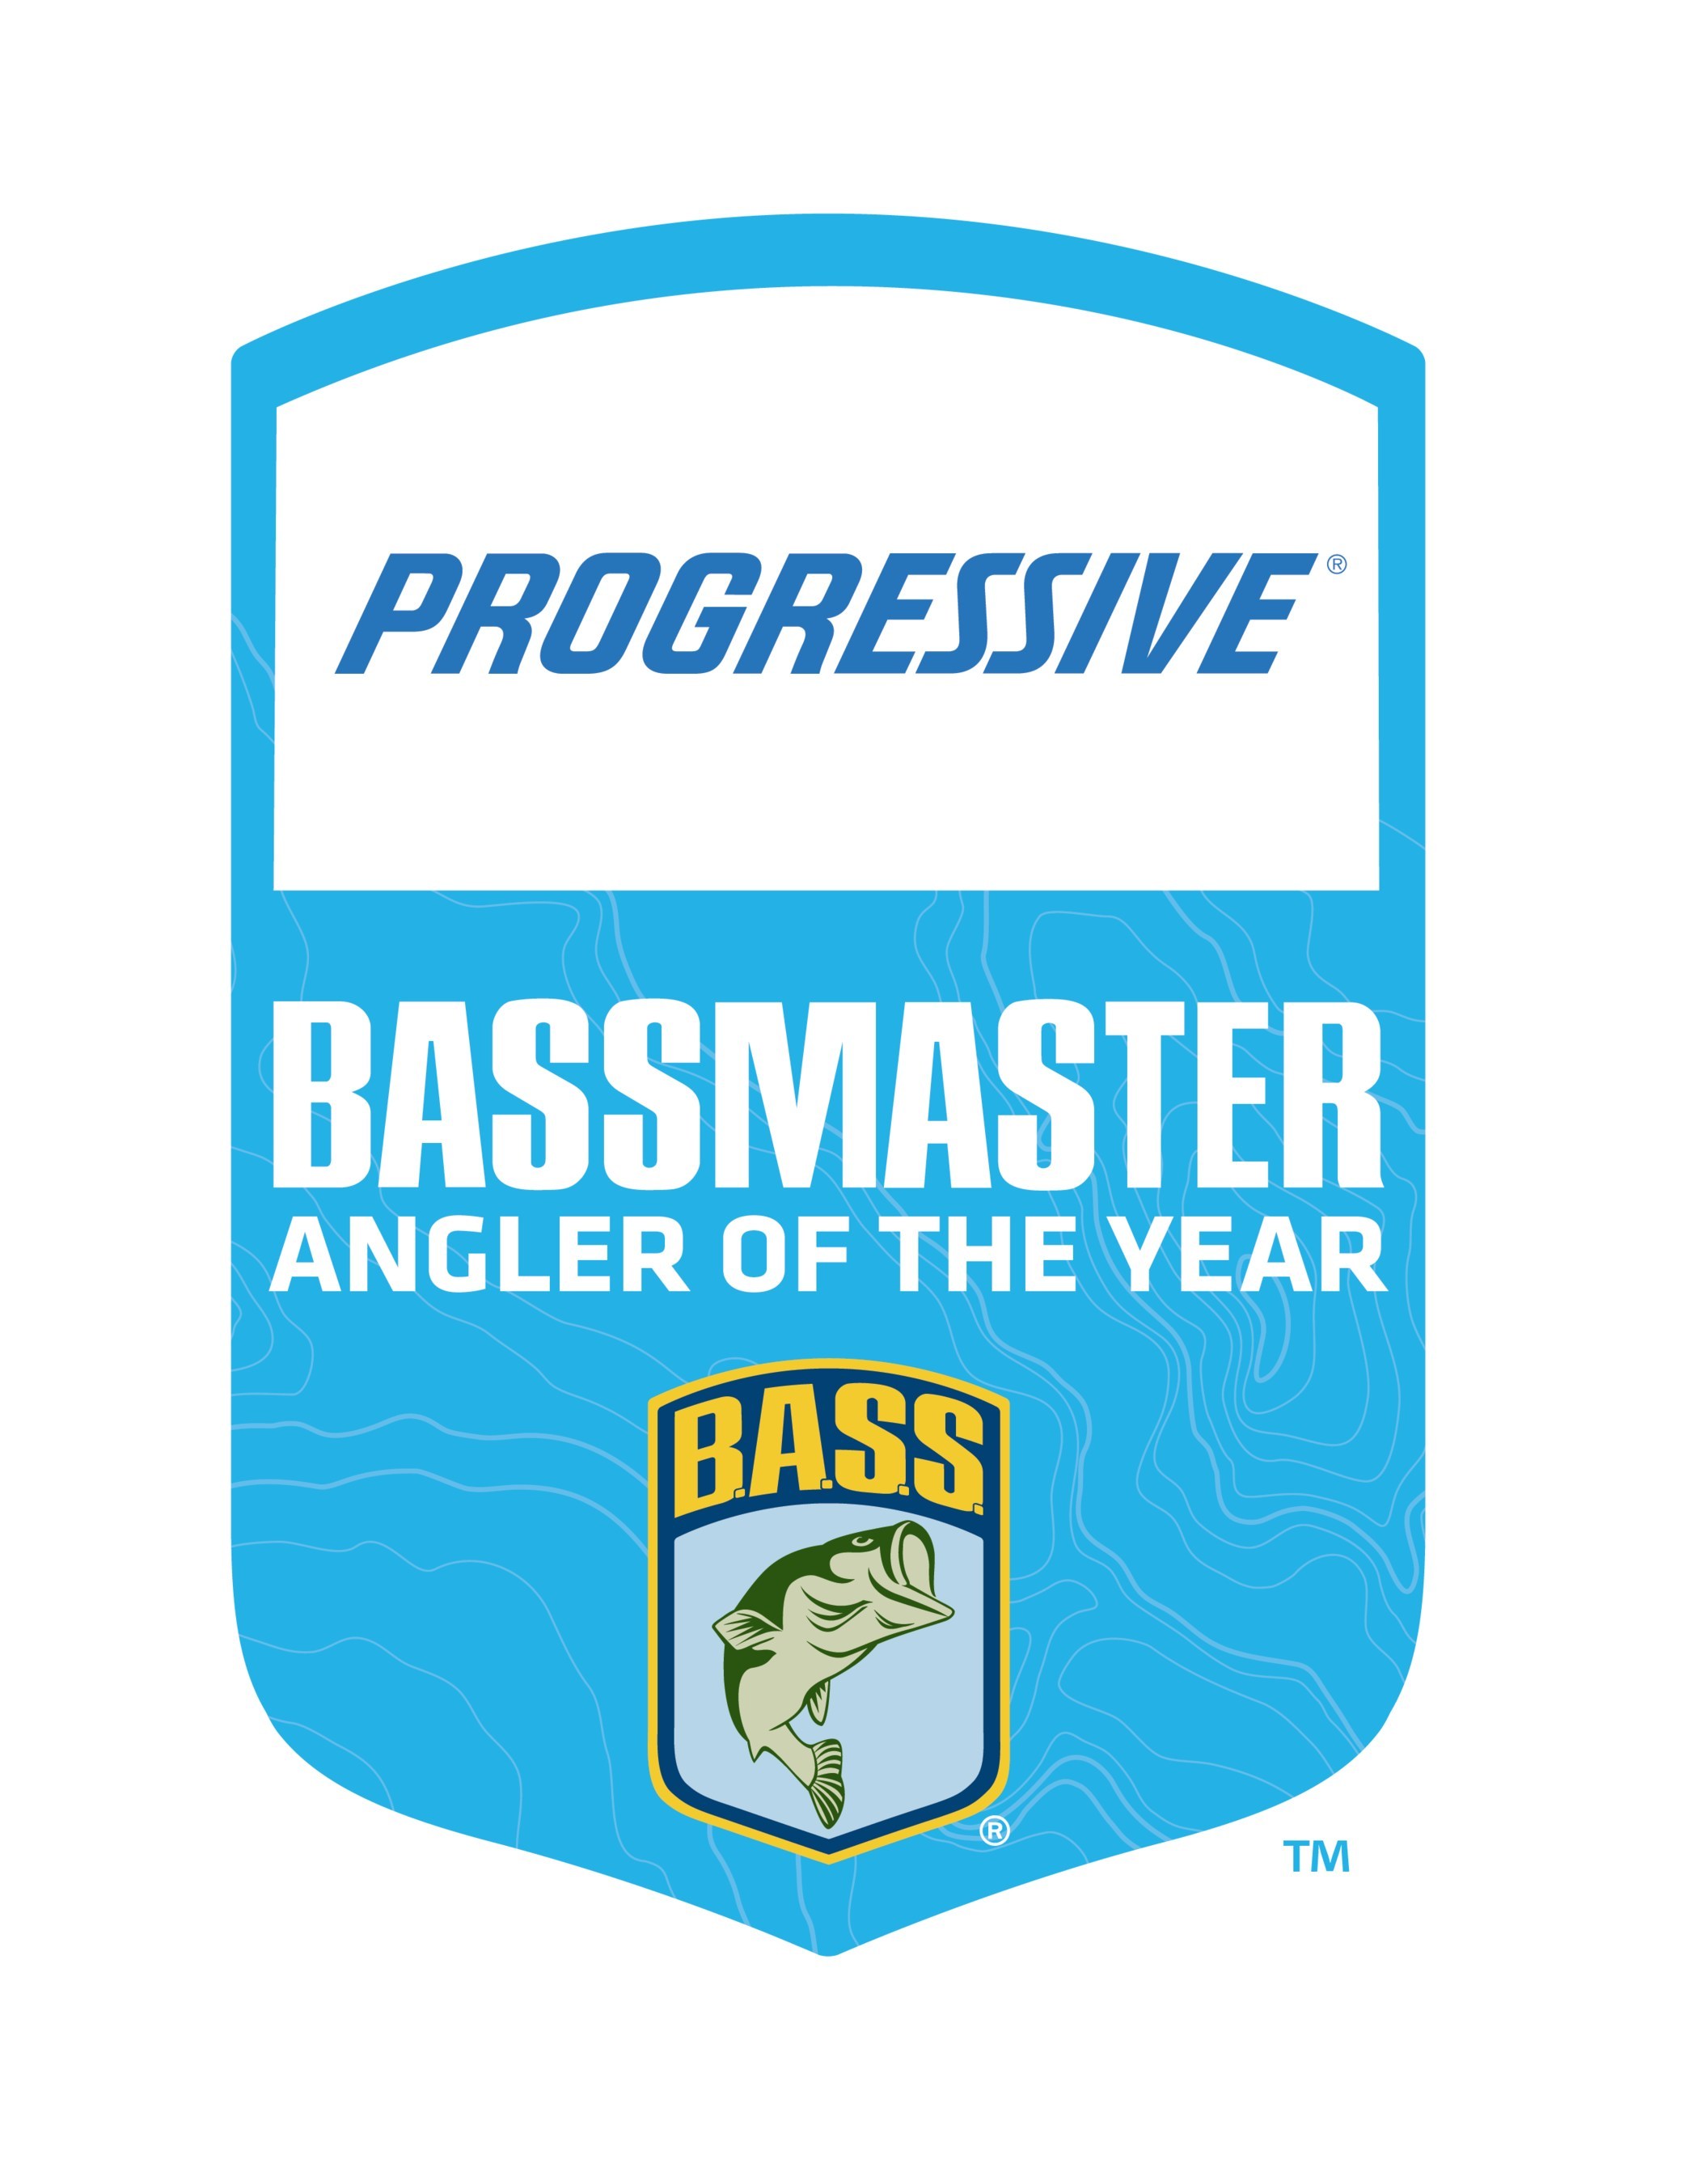 Progressive Insurance Claims Bassmaster Angler Of The Year Race